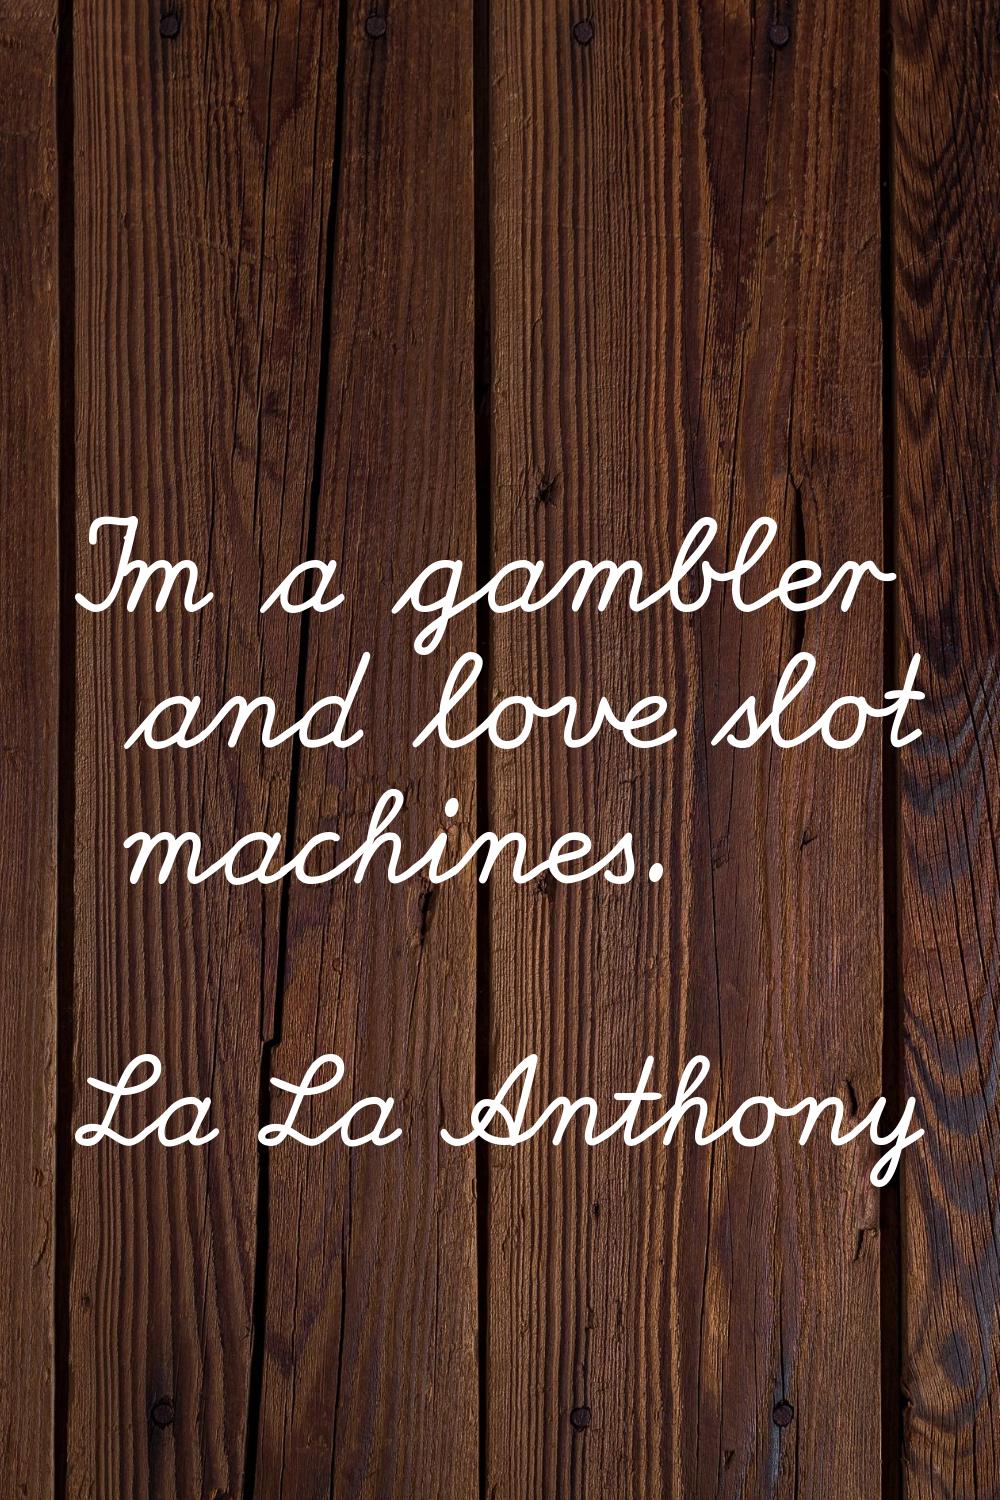 I'm a gambler and love slot machines.